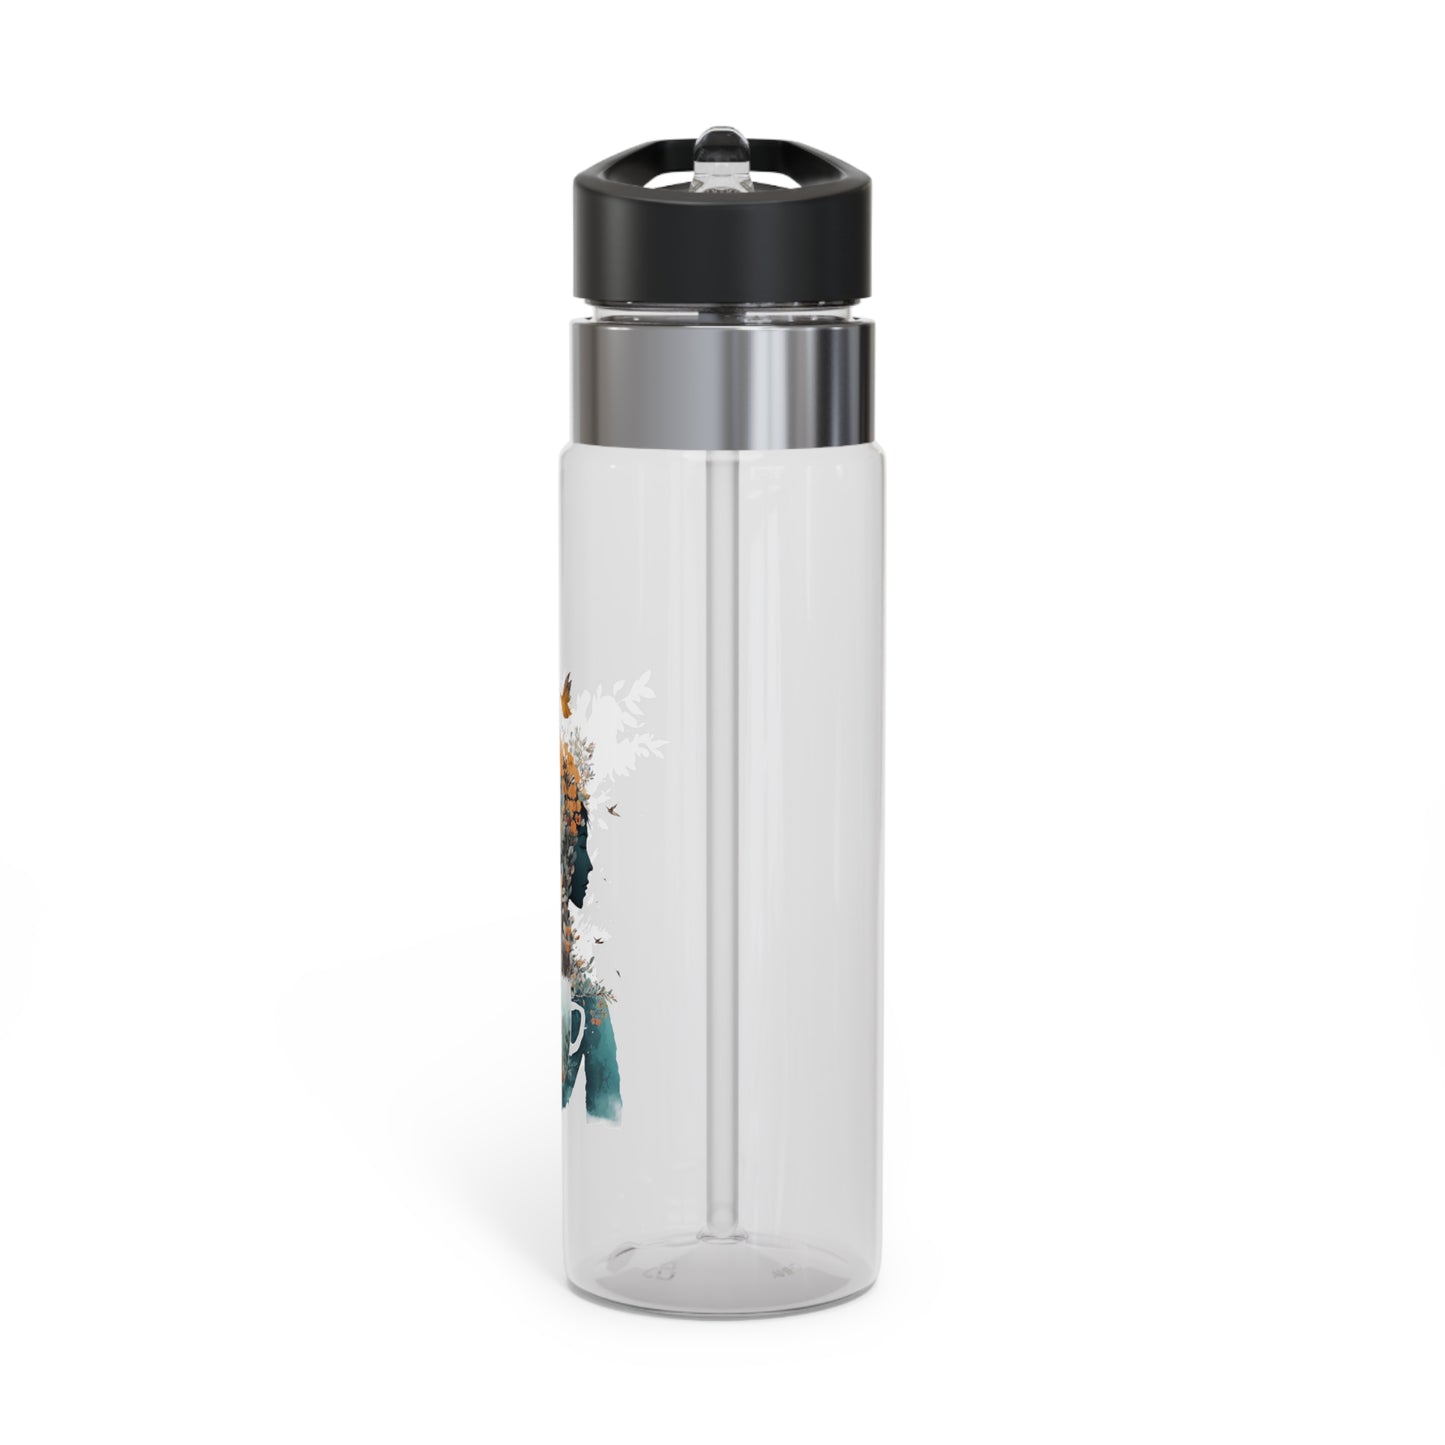 Neduz Designs "Cup of Life" Kensington Tritan™ Sport Bottle, 20oz - Stylish, Durable, and Eco-Friendly